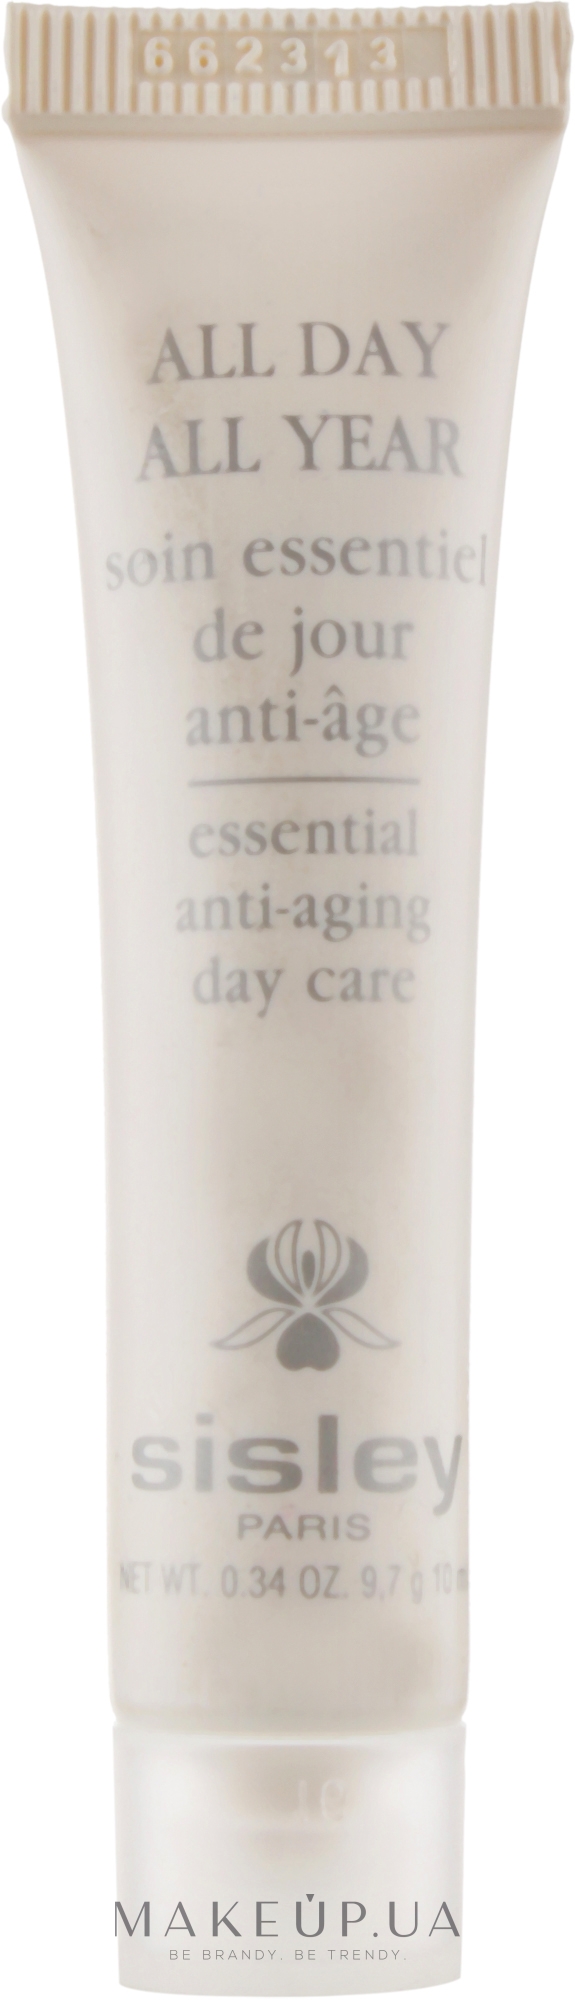 Антивозрастной крем для лица - Sisley All Day All Year Essential Anti-aging Day Care (мини) — фото 10ml